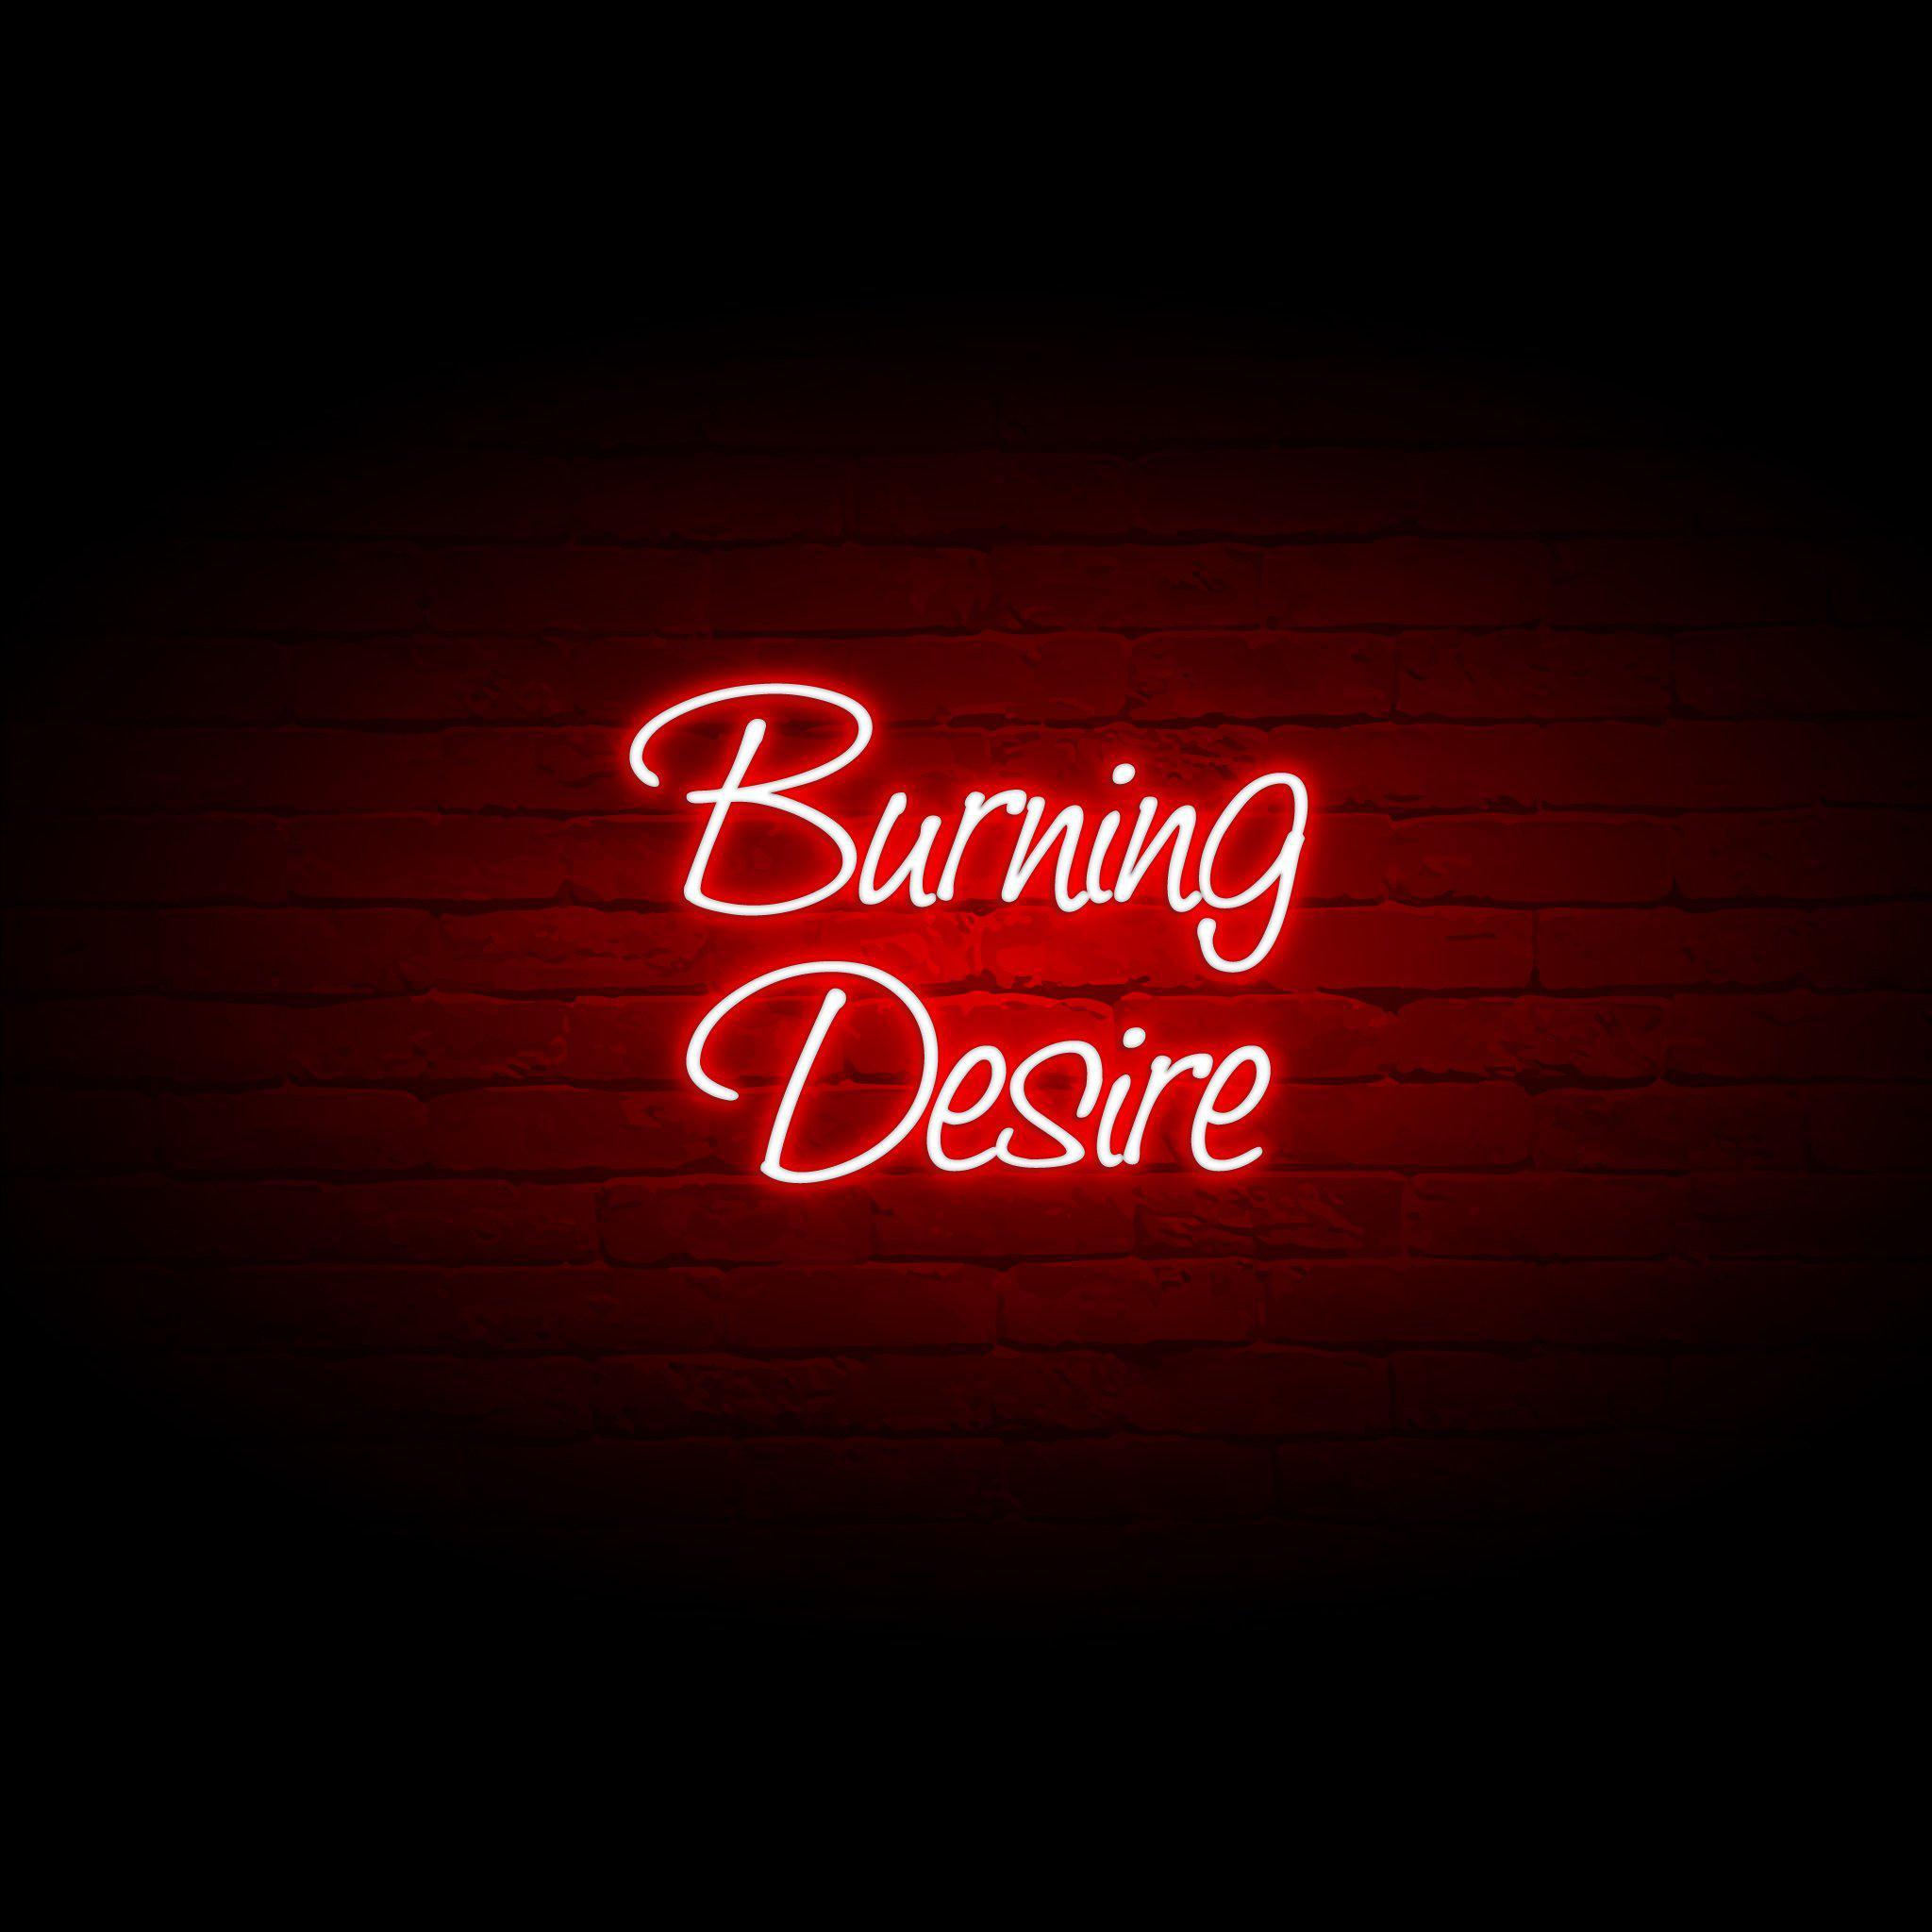 'BURNING DESIRE' NEON SIGN